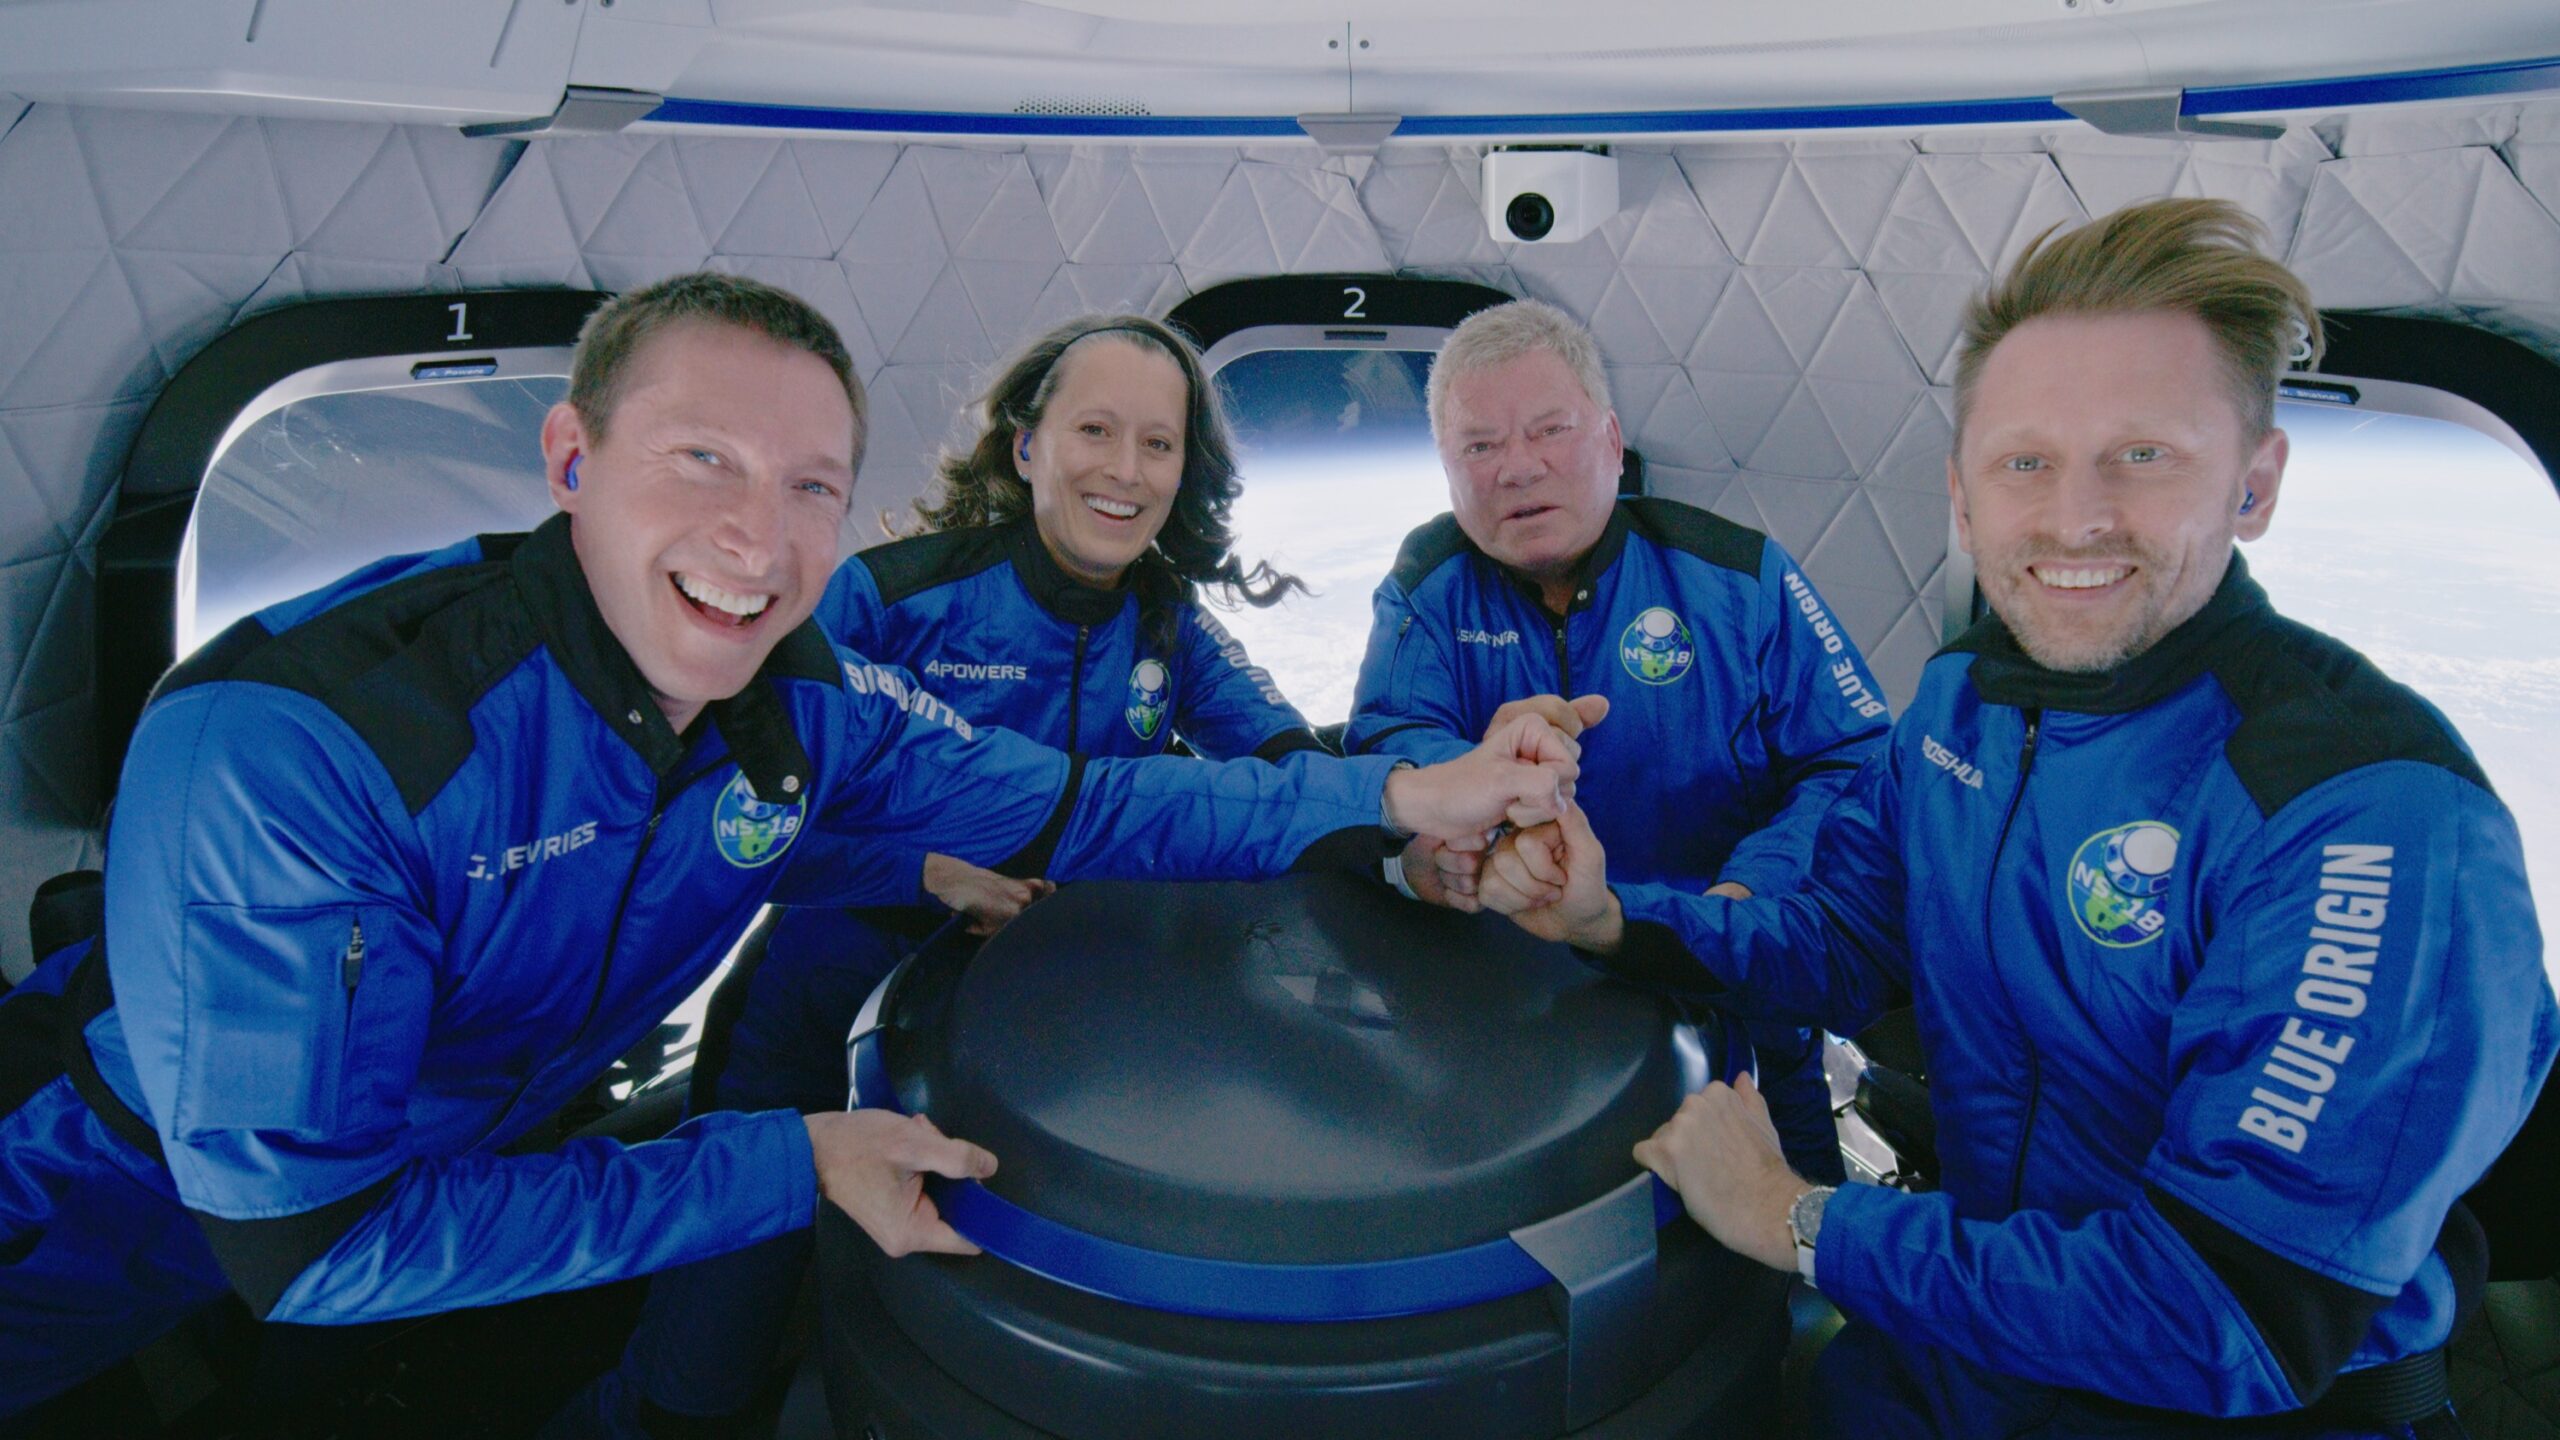 Actor William Shatner has profound reaction to Blue Origin space flight